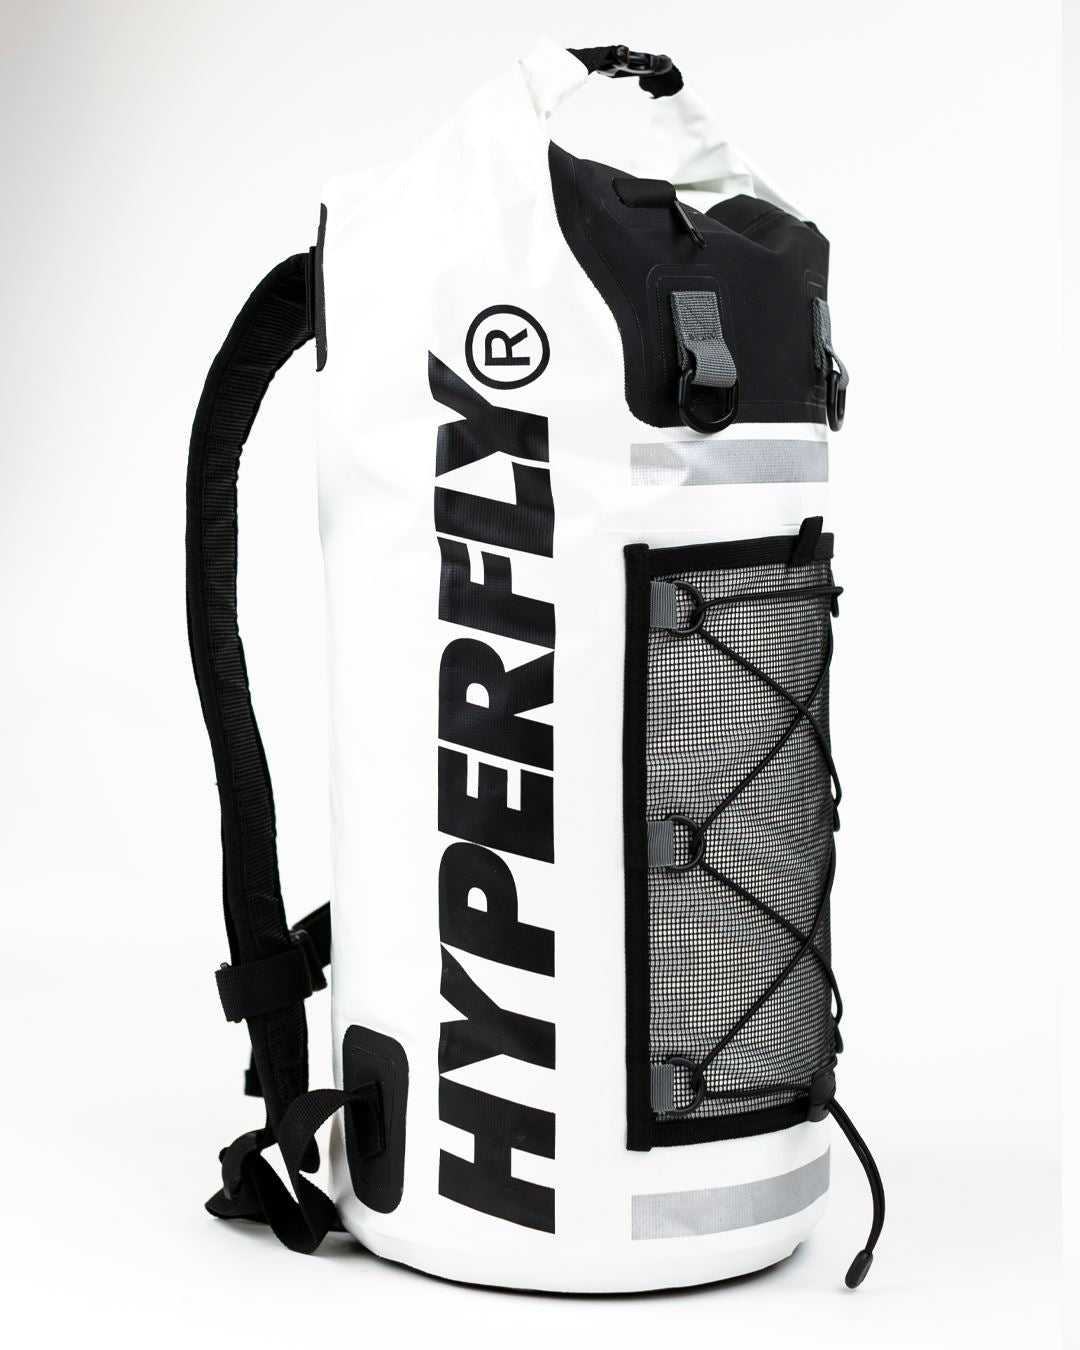 The New Hyperfly FlyDry Bag Is The Ultimate Waterproof Bag